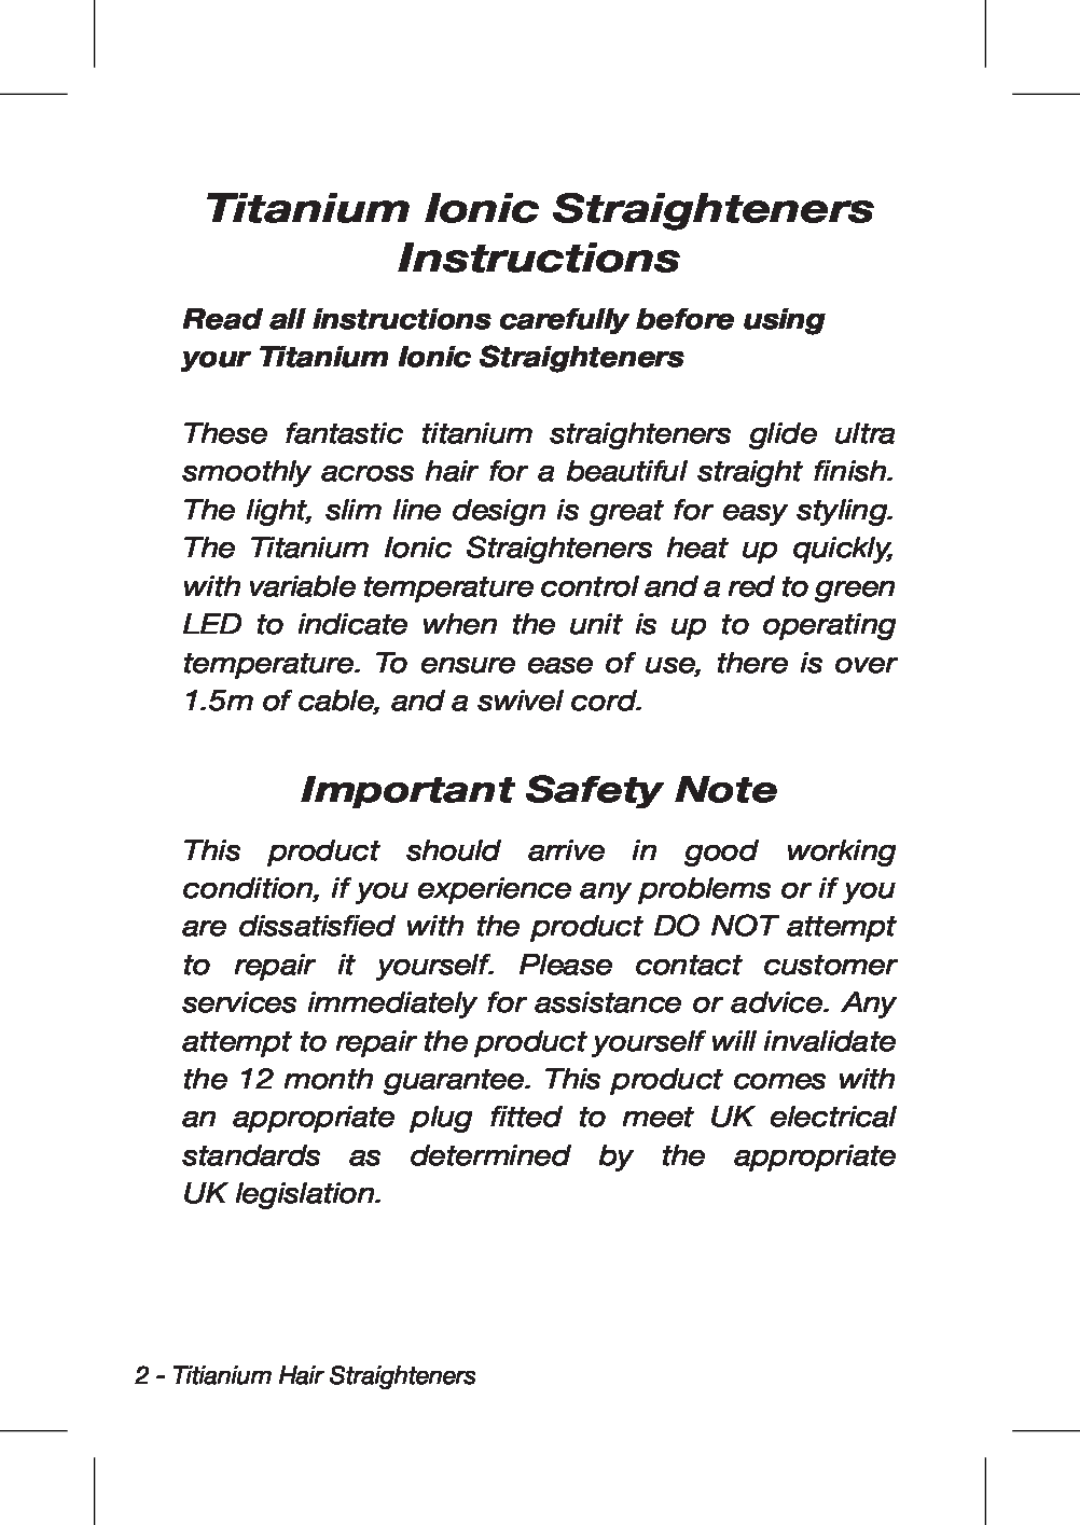 John Mills John Mills Titanium Hair Straightener manual Important Safety Note, Titanium Ionic Straighteners Instructions 